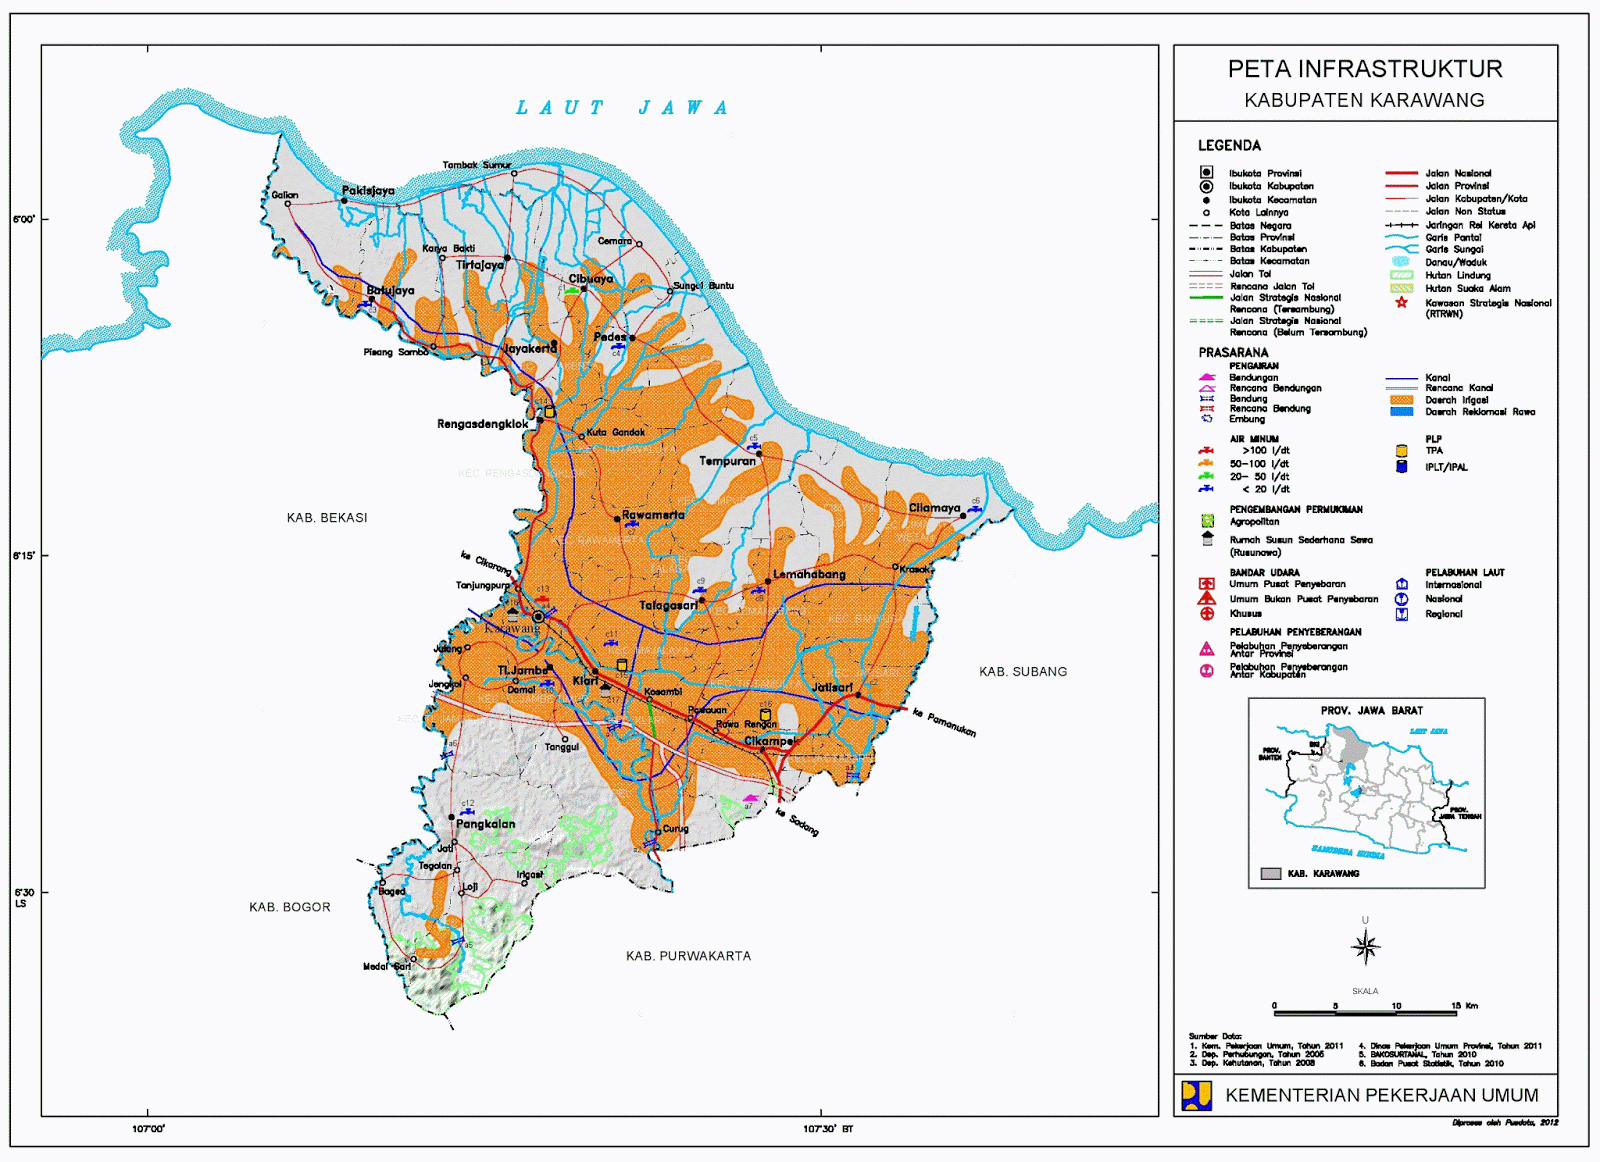  Peta  Kota Peta  Kabupaten Karawang